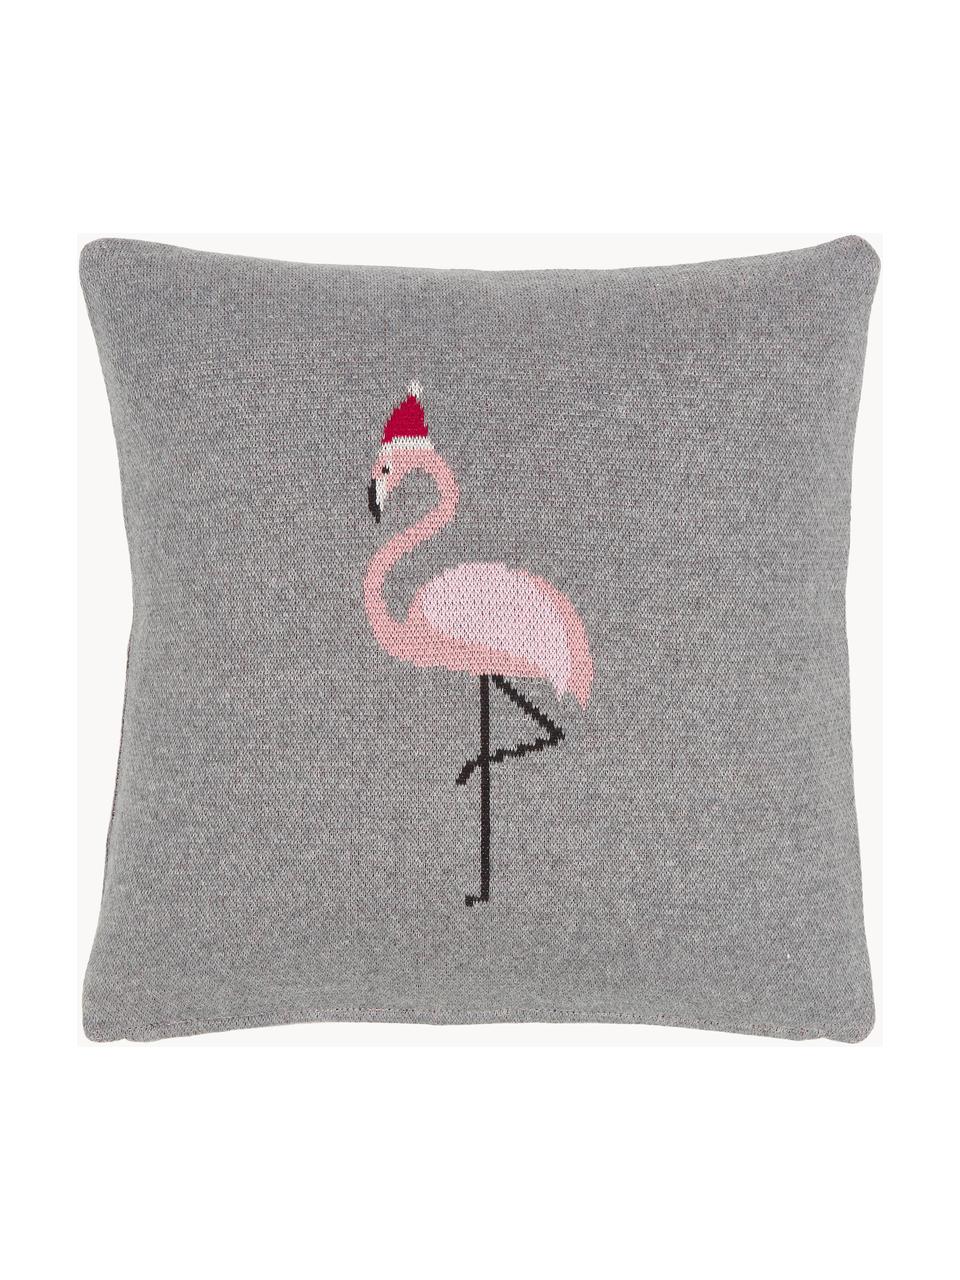 Pletený povlak na polštář Flamingo, 100 % bavlna, Šedá, světle růžová, Š 40 cm, D 40 cm